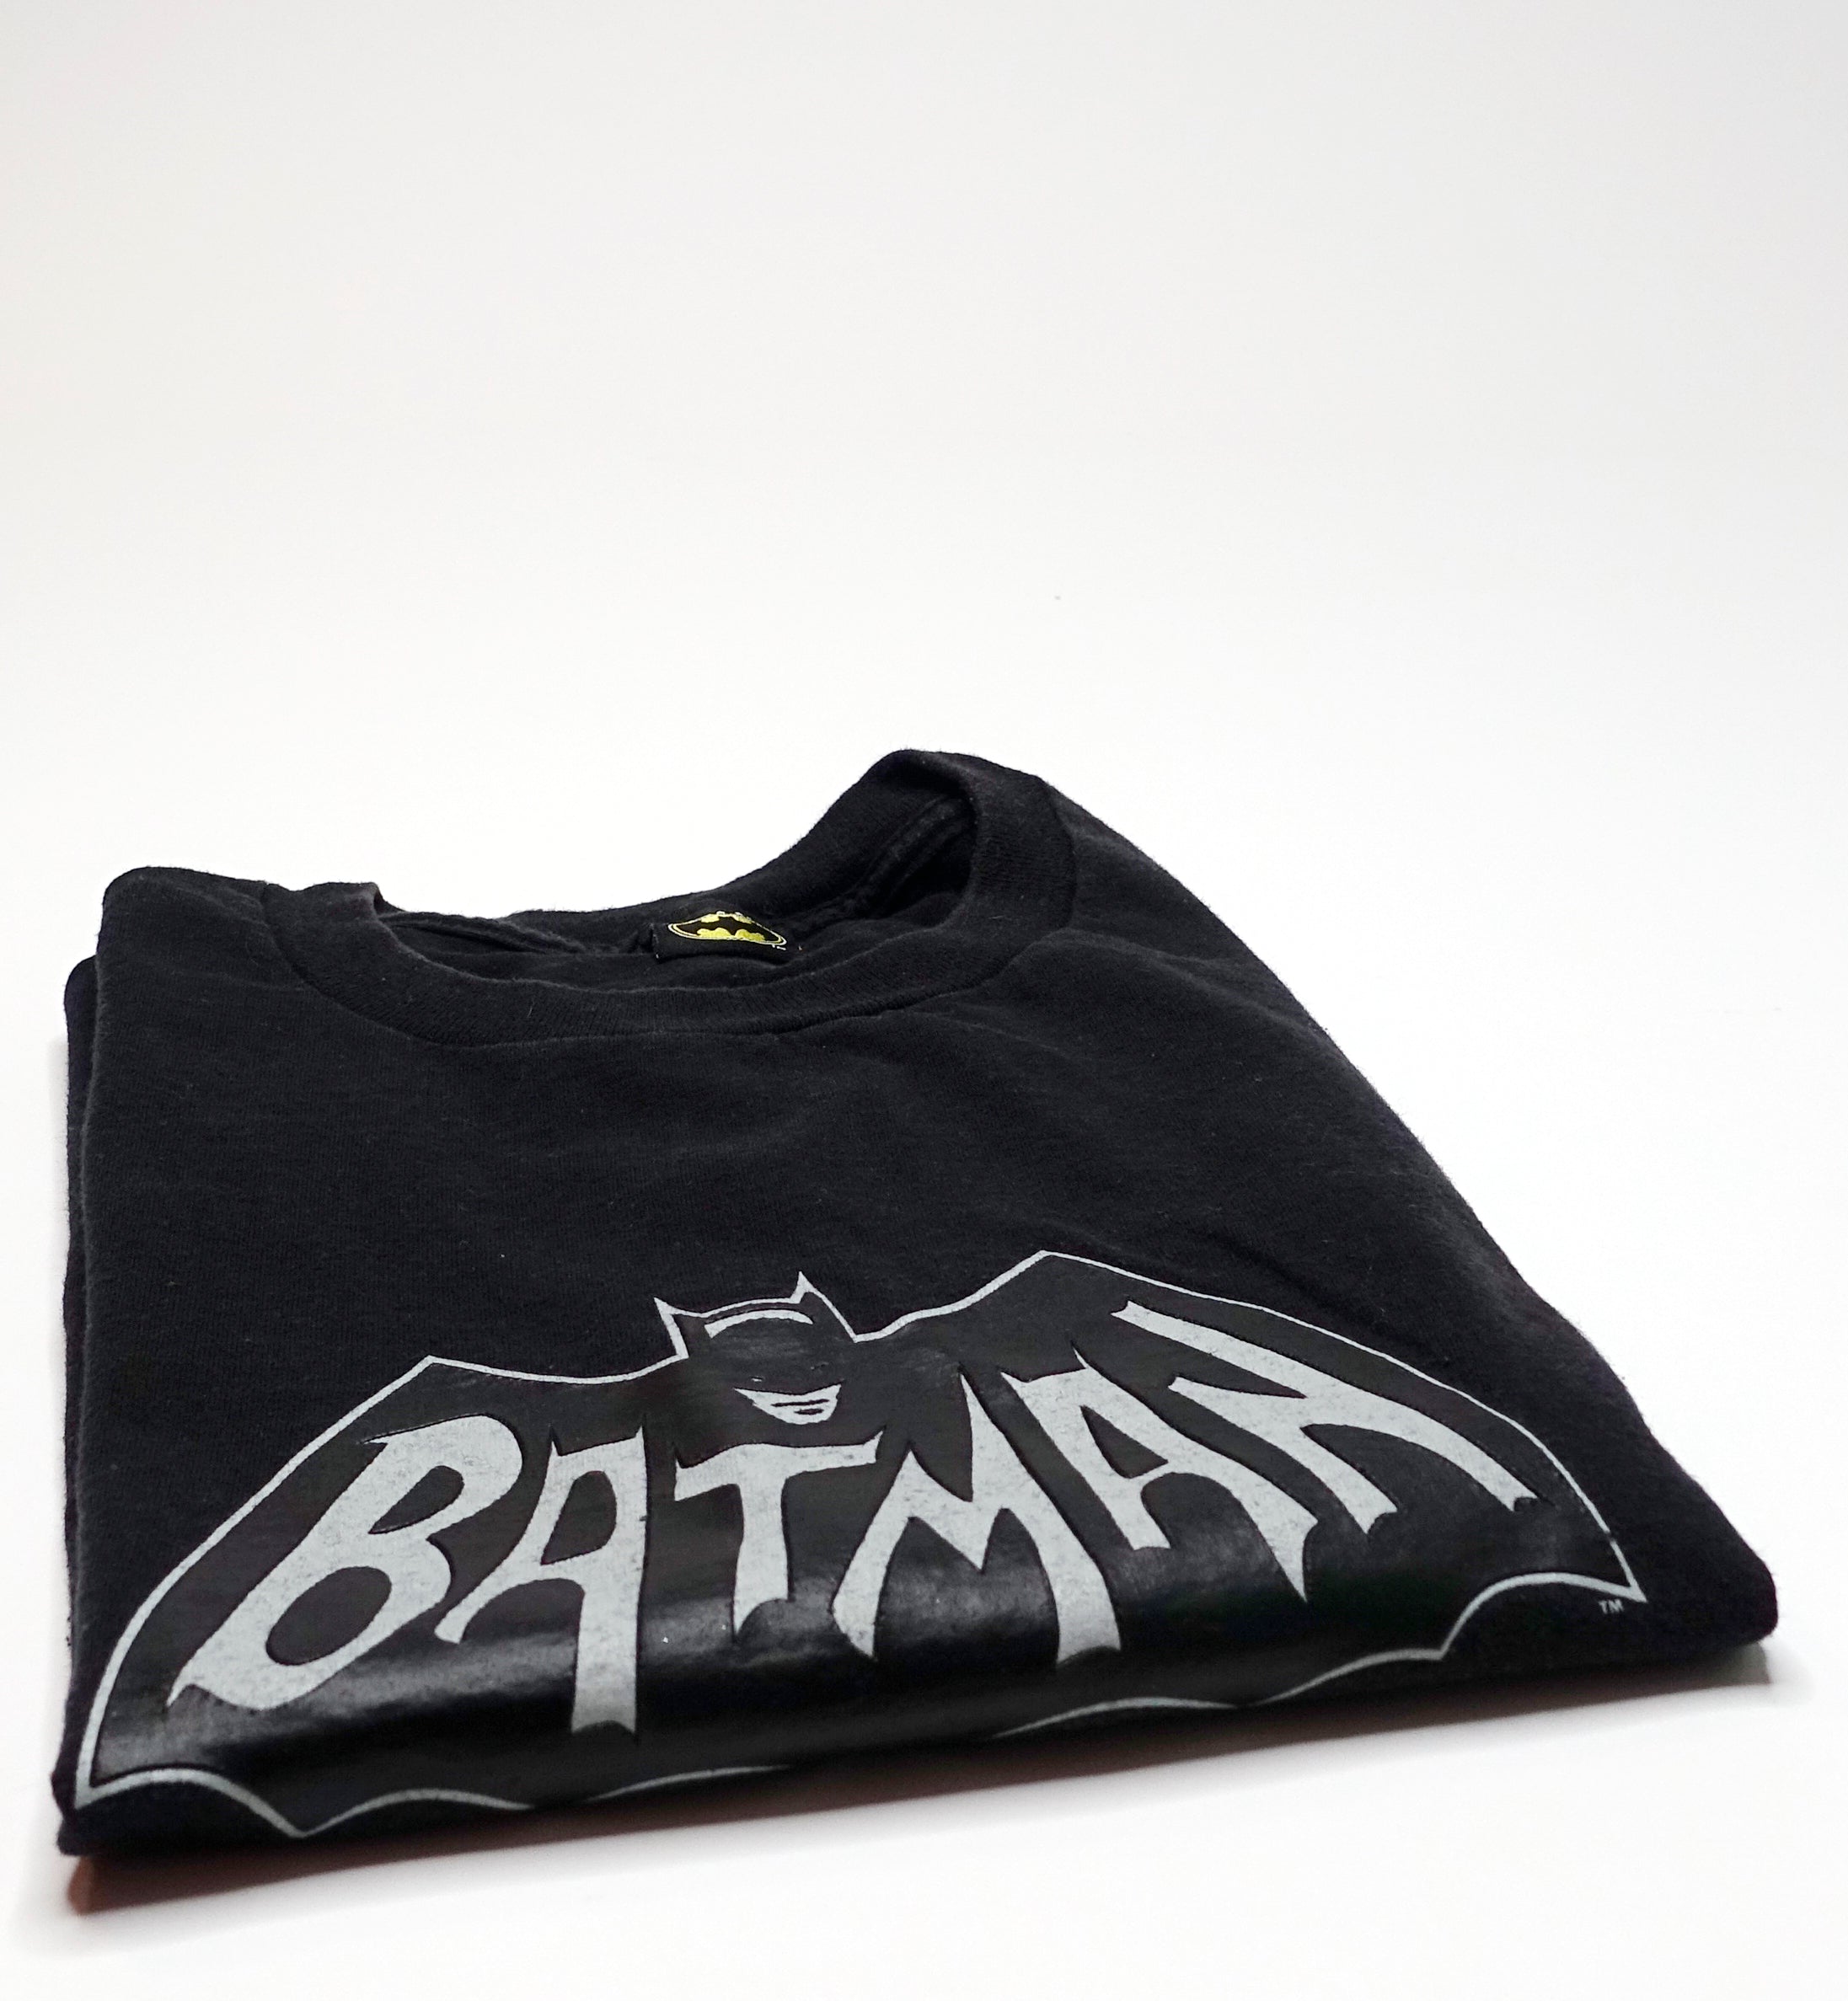 Batman - 90's Black/Grey Bat Logo Shirt Size Large